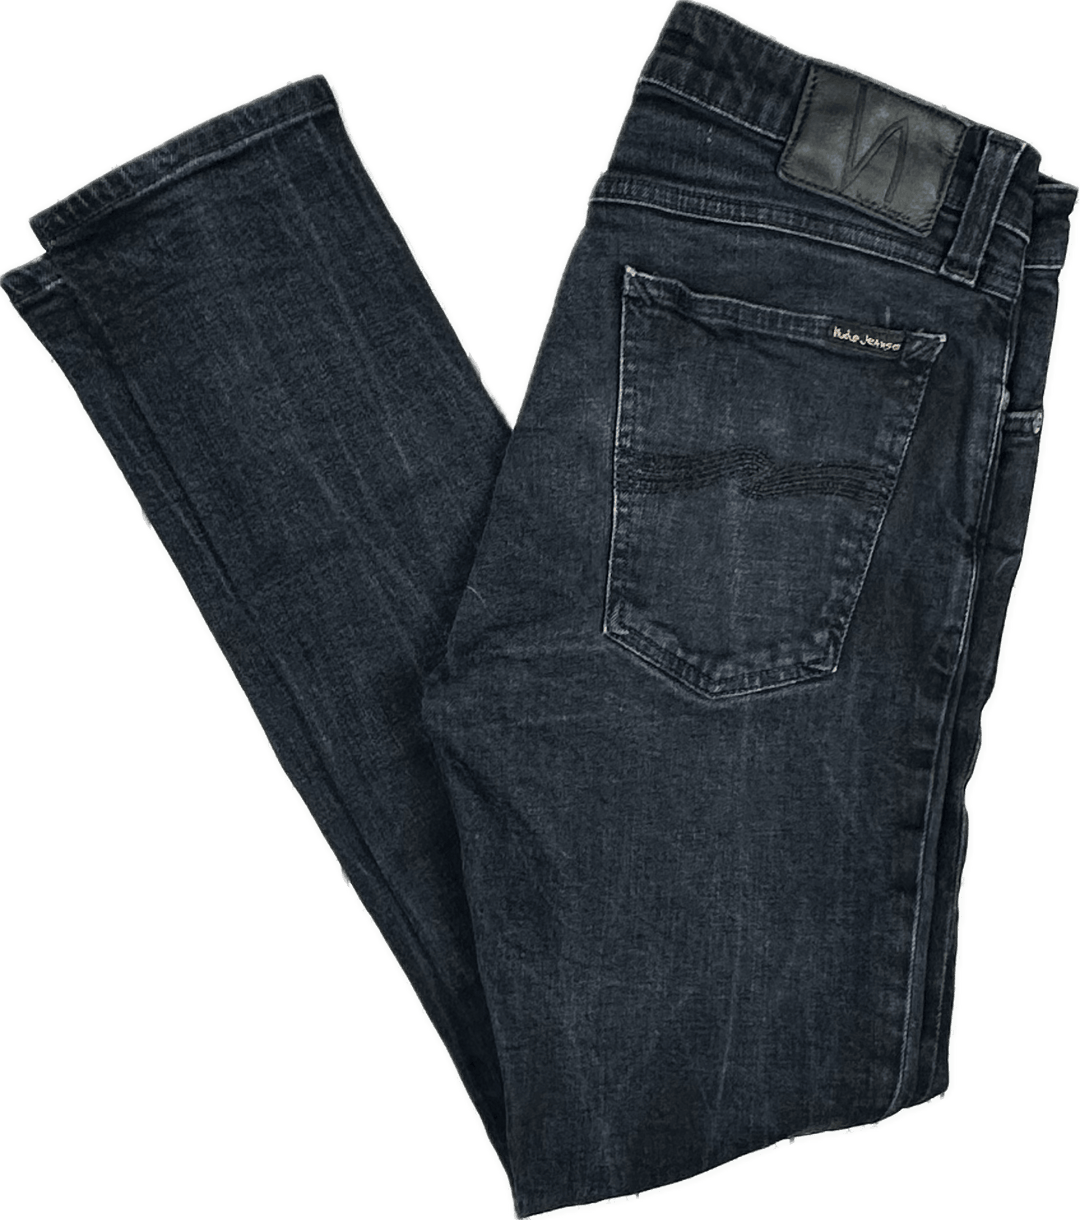 Nudie 'Skinny Lin' Black Black Wash Denim Jeans- Size 31/32 - Jean Pool